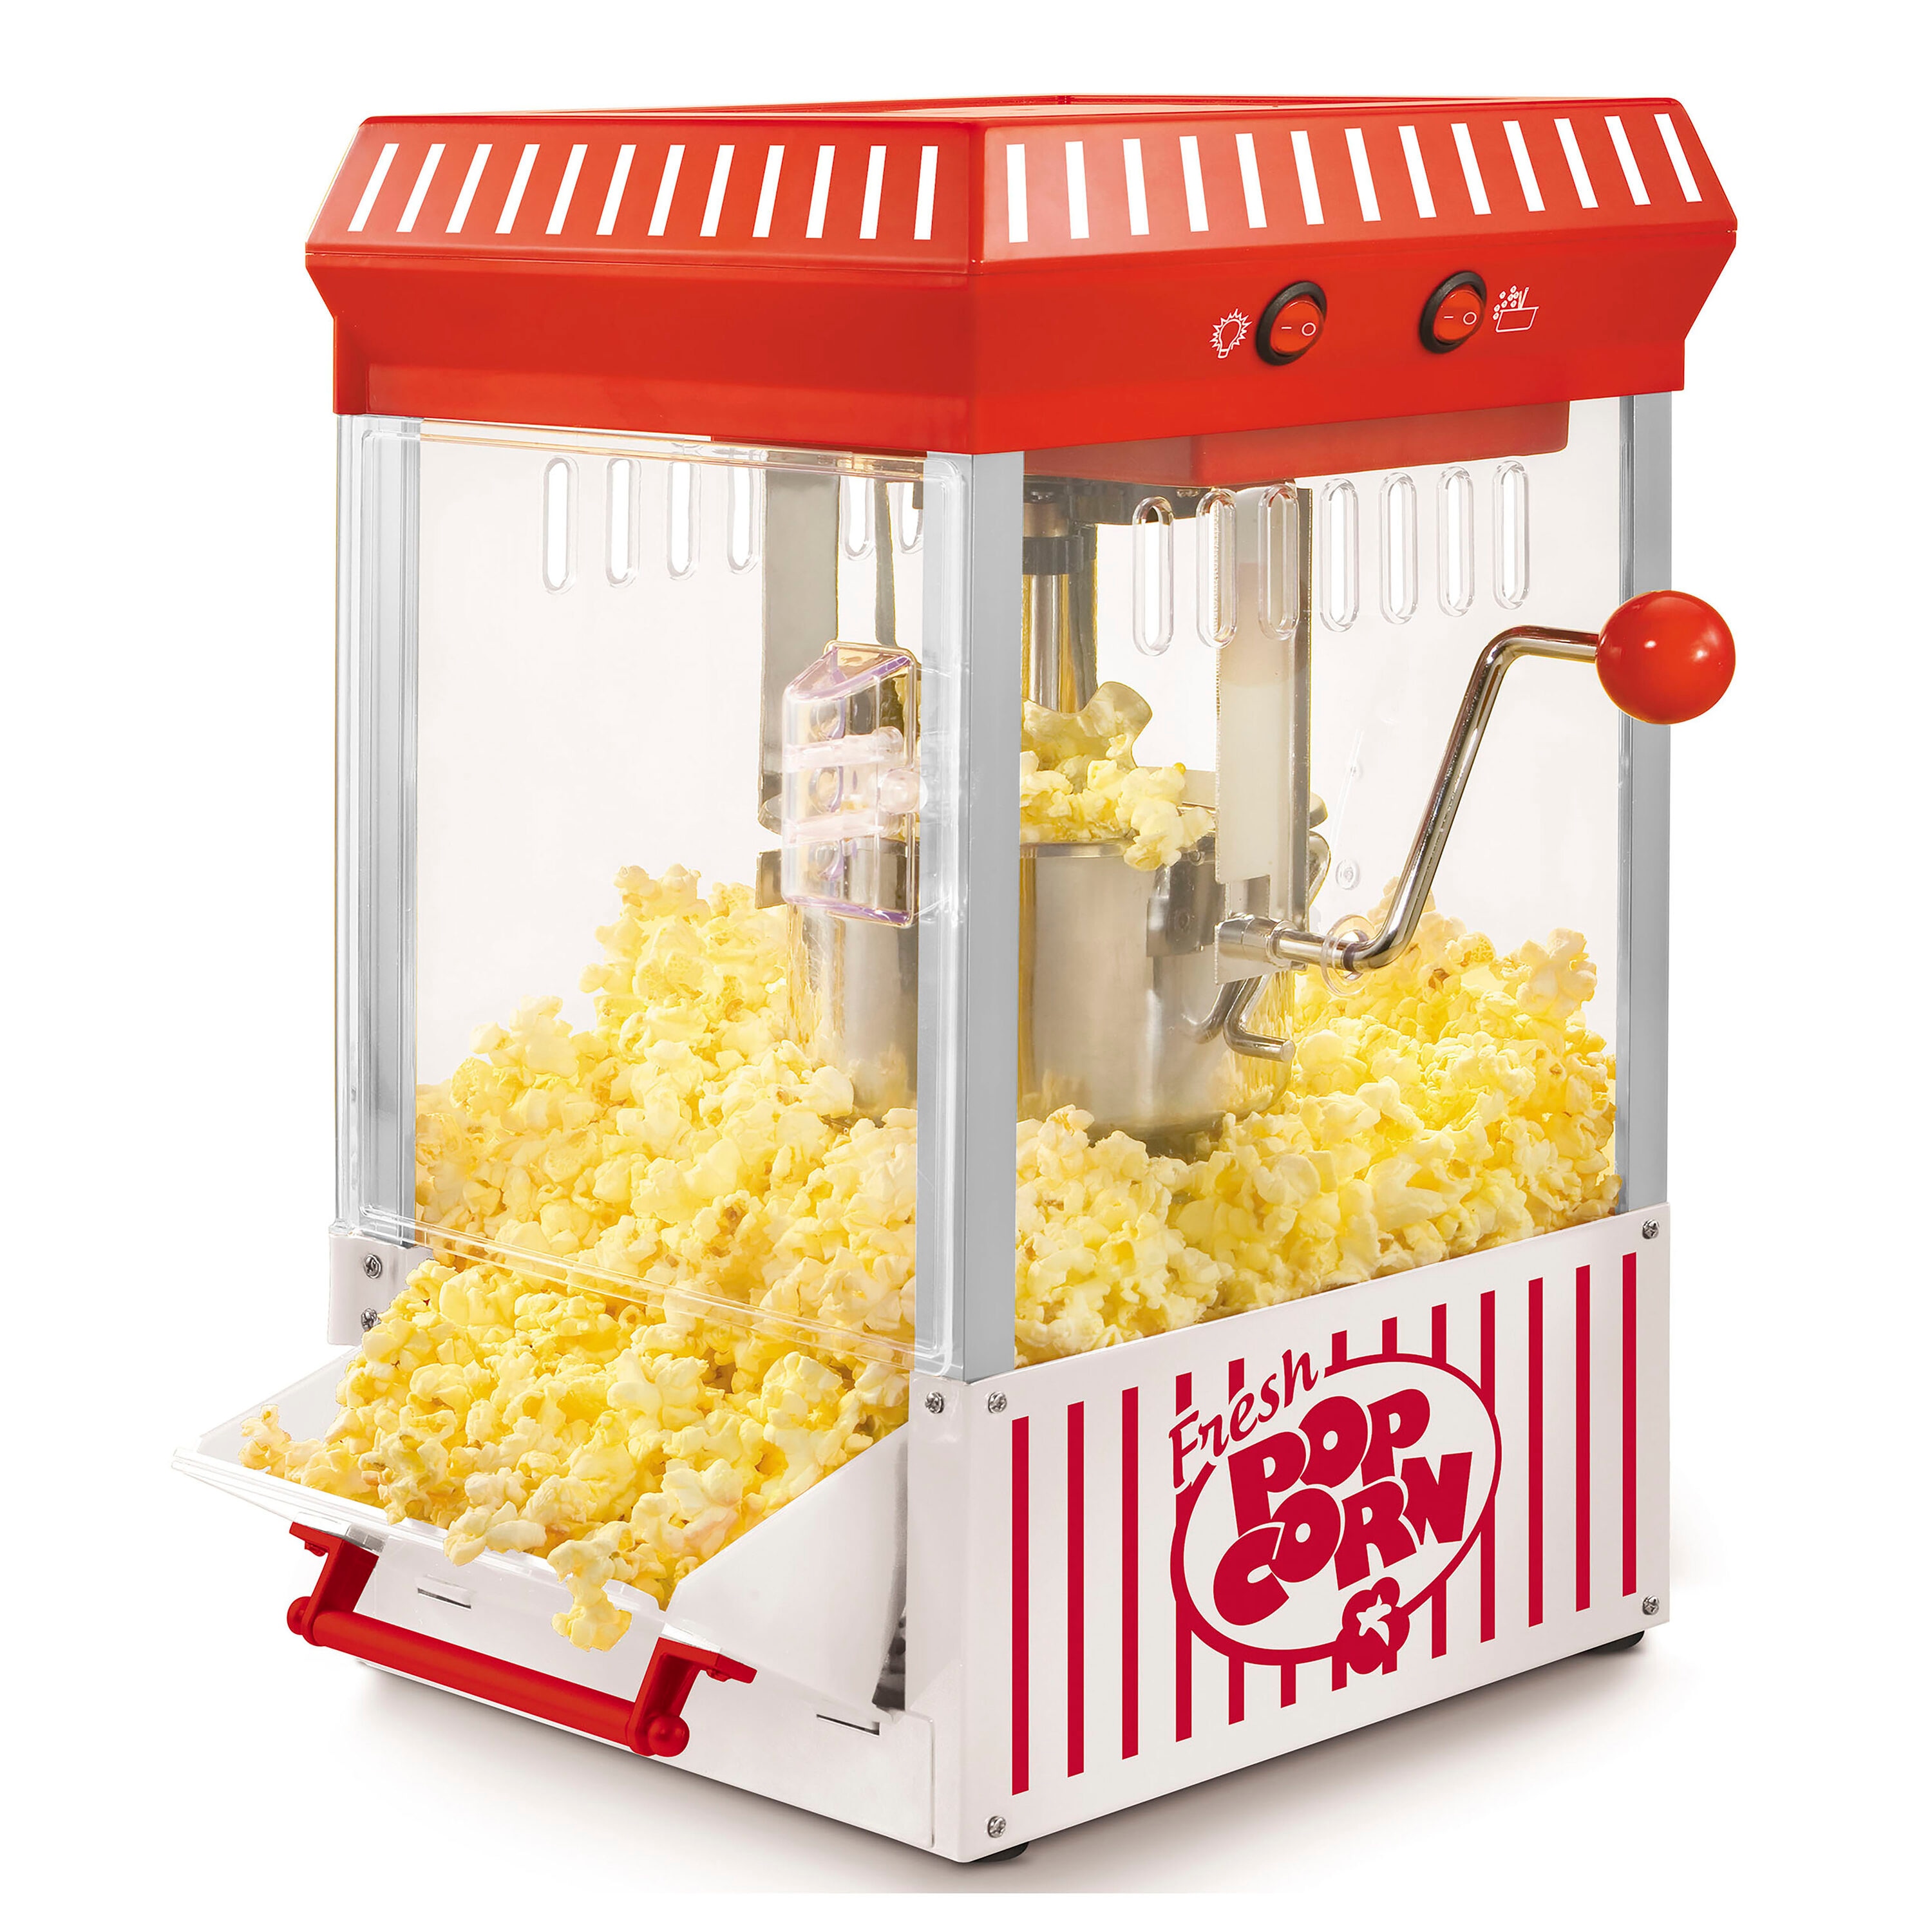 Nostalgia 16 Cup Hot Air Popcorn Maker 